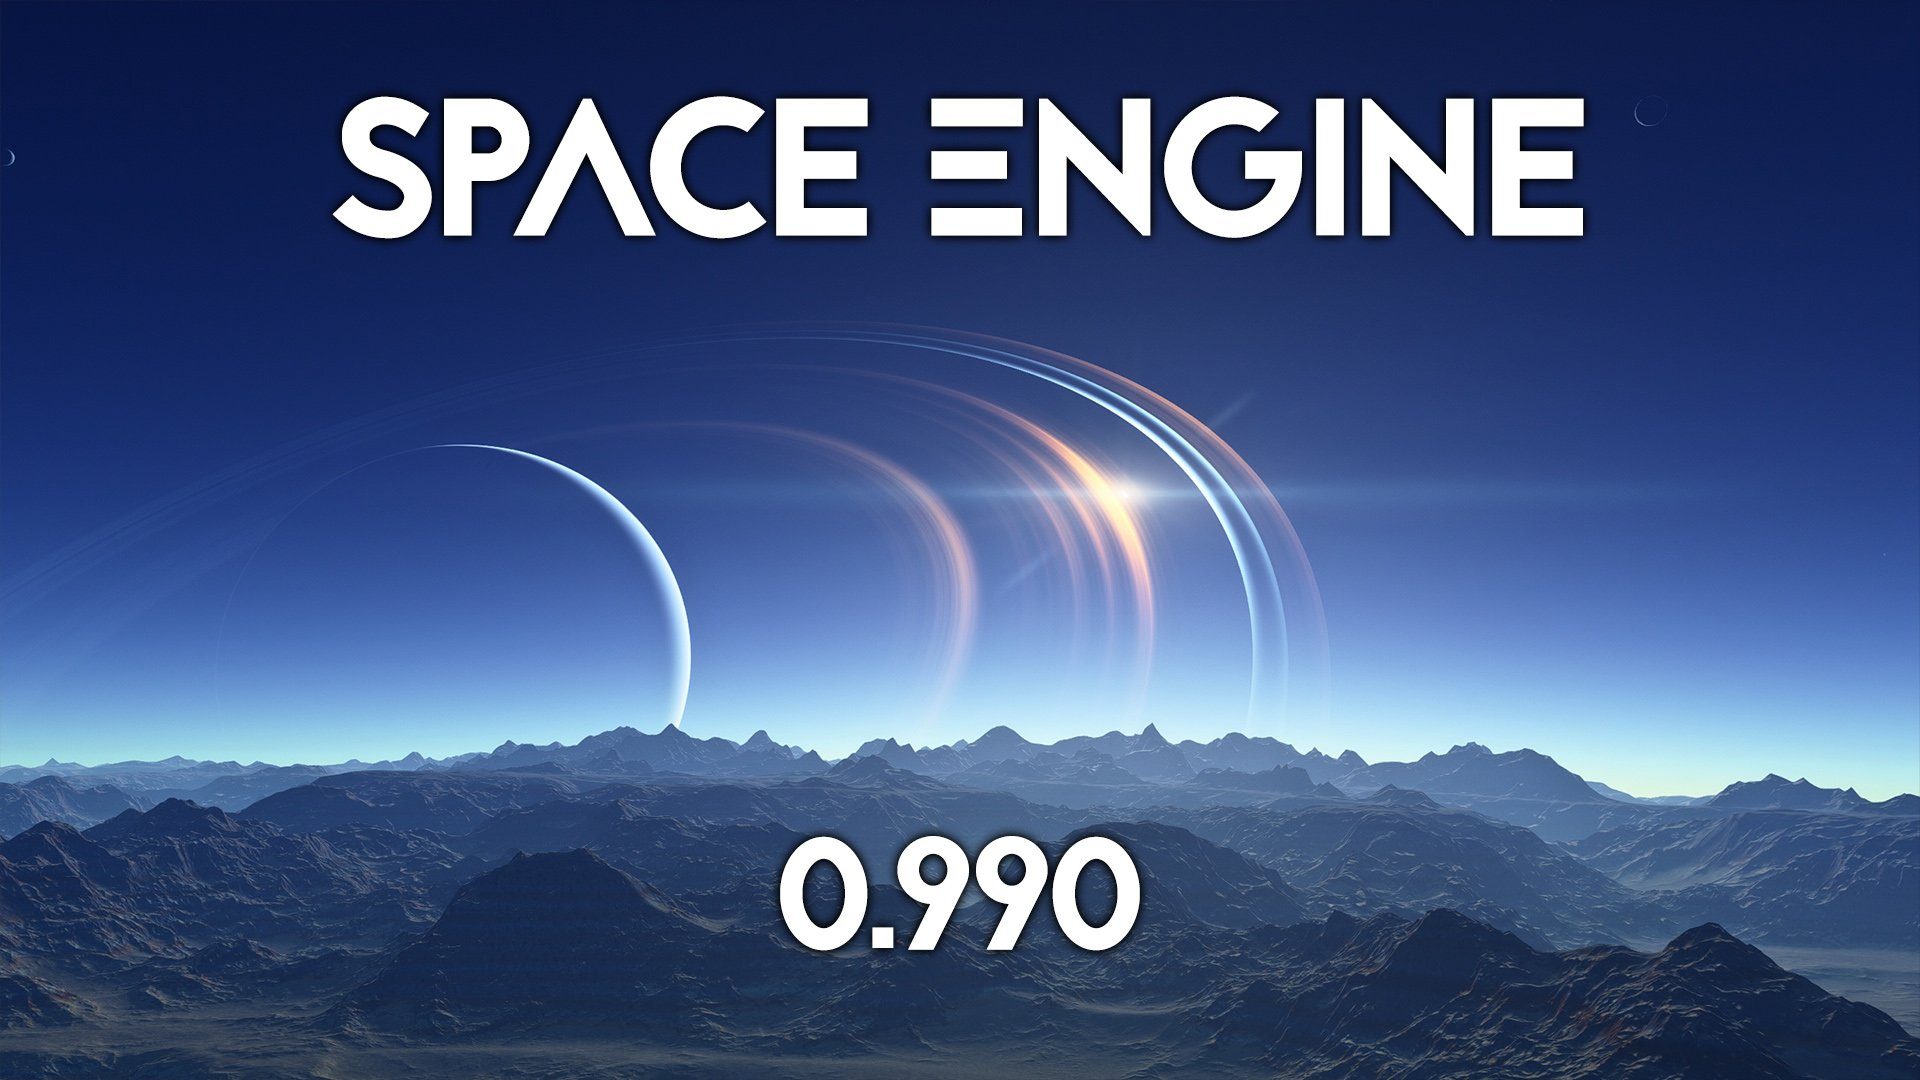 spaceengine-pc-version-full-game-free-download-5641777